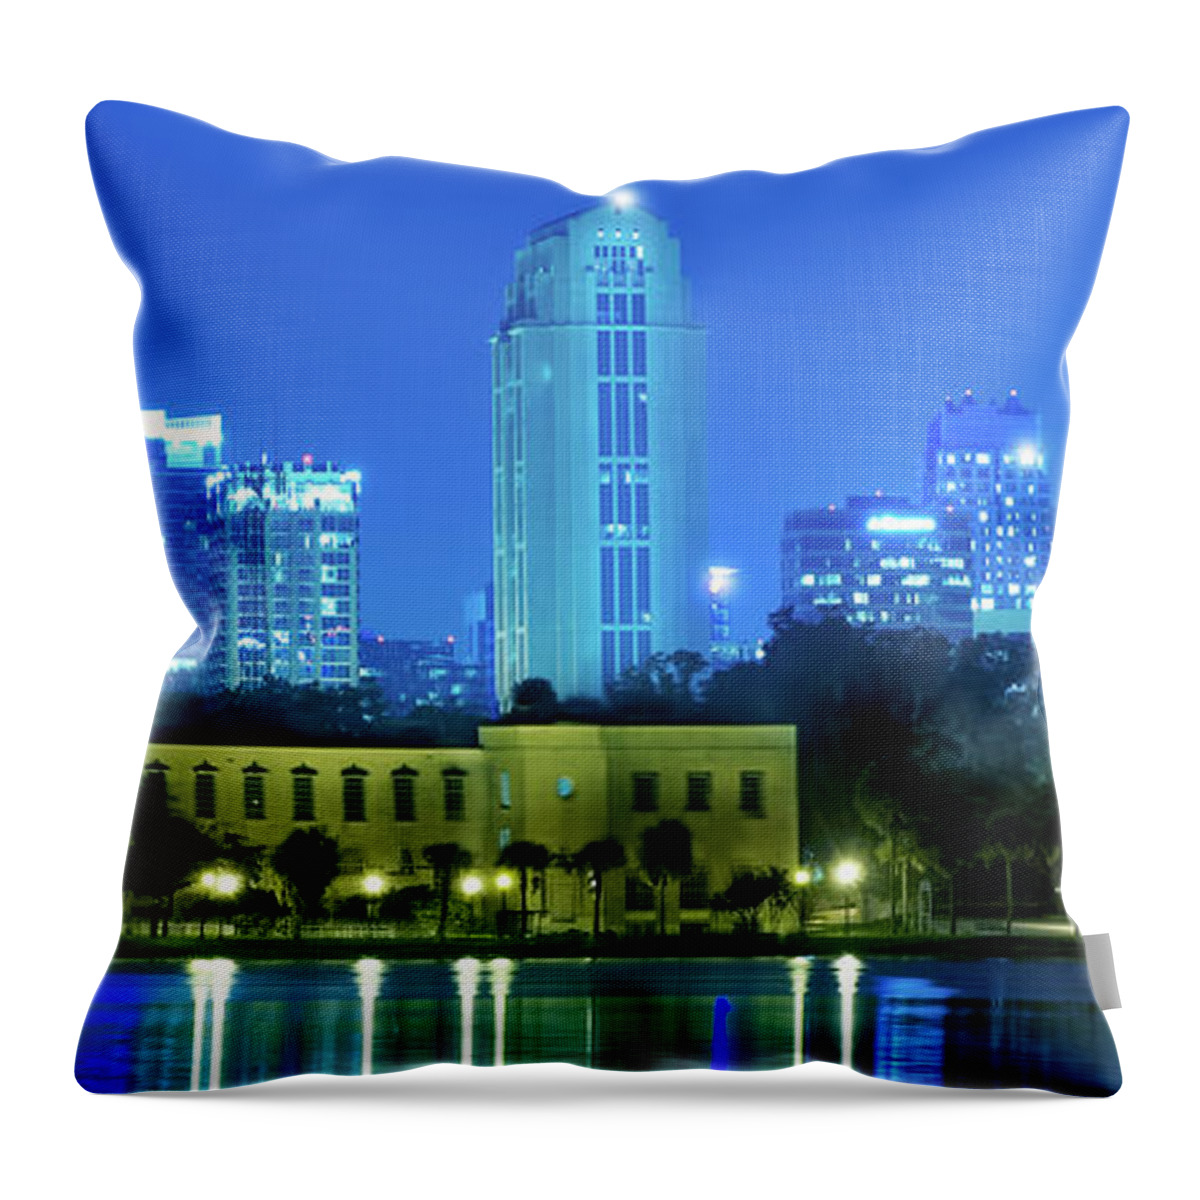 Orlando Skyline Throw Pillow featuring the photograph Orlando Across The Lake by Mark Andrew Thomas